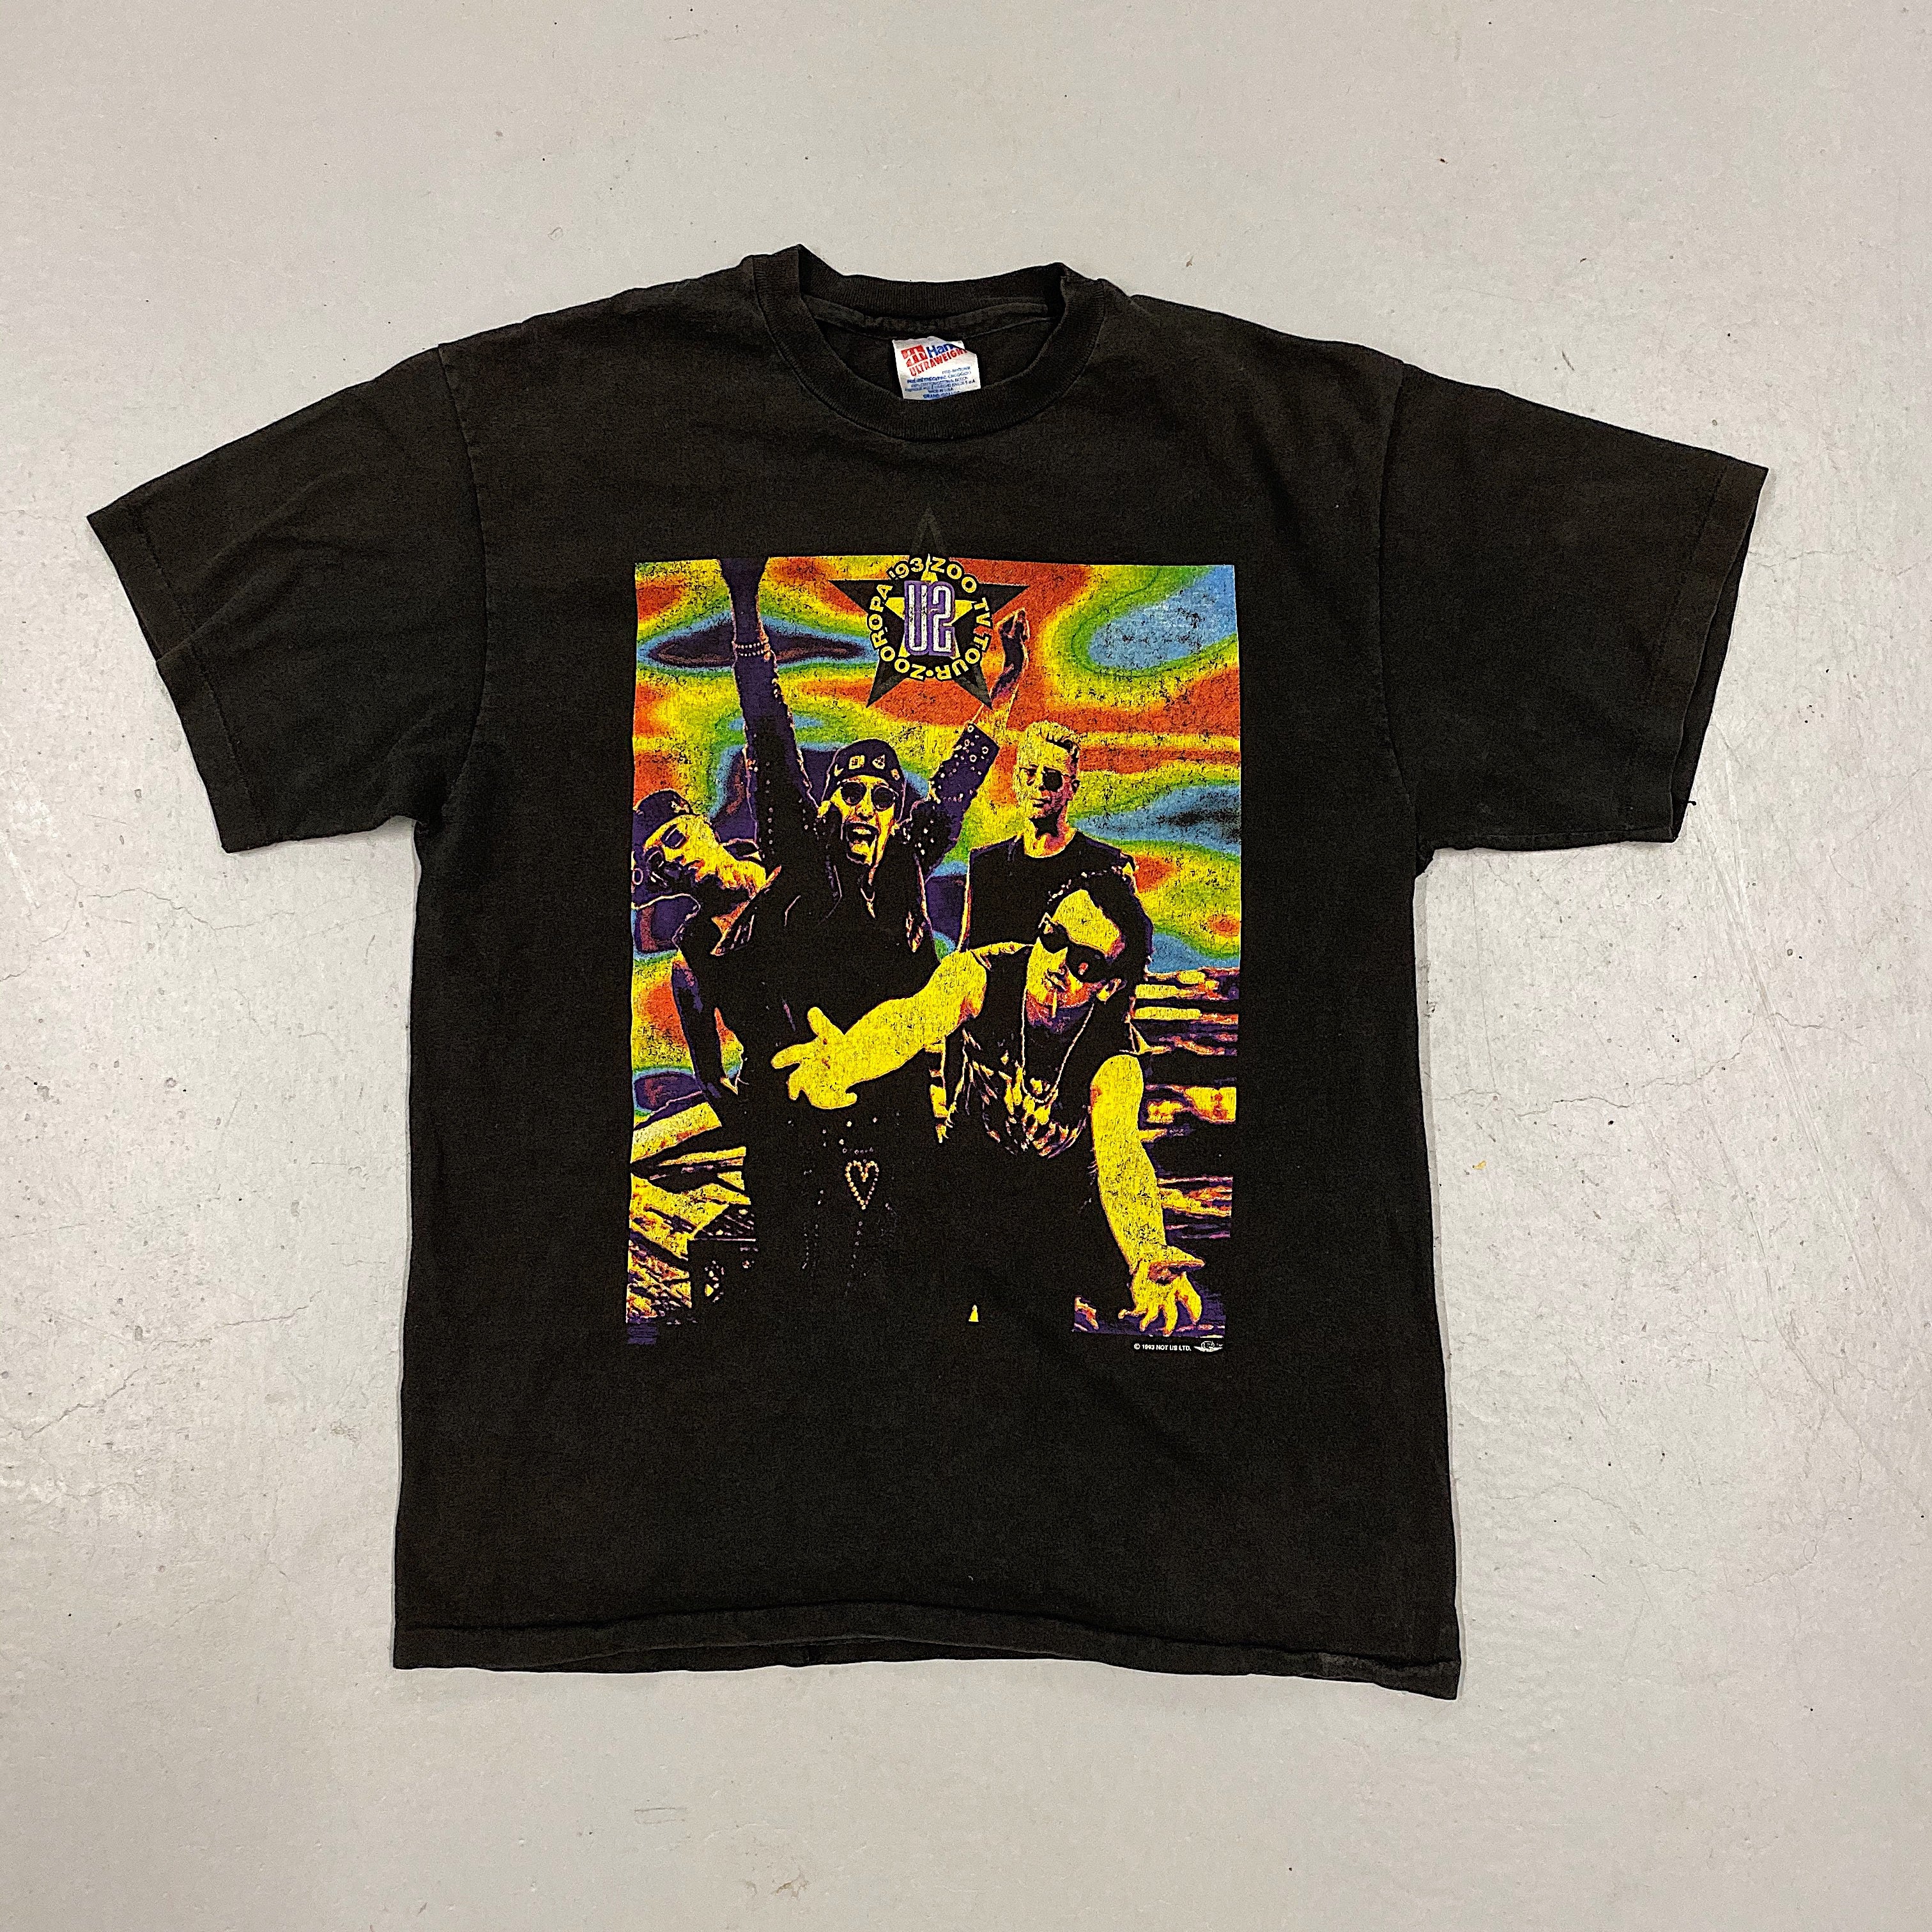 U2 Zooropa Concert T-Shirt - 1993 Zoo TV European Tour - Large Size - Hanes Tag - Rare Vintage Rock Shirts - 1990s Apparel - Numb